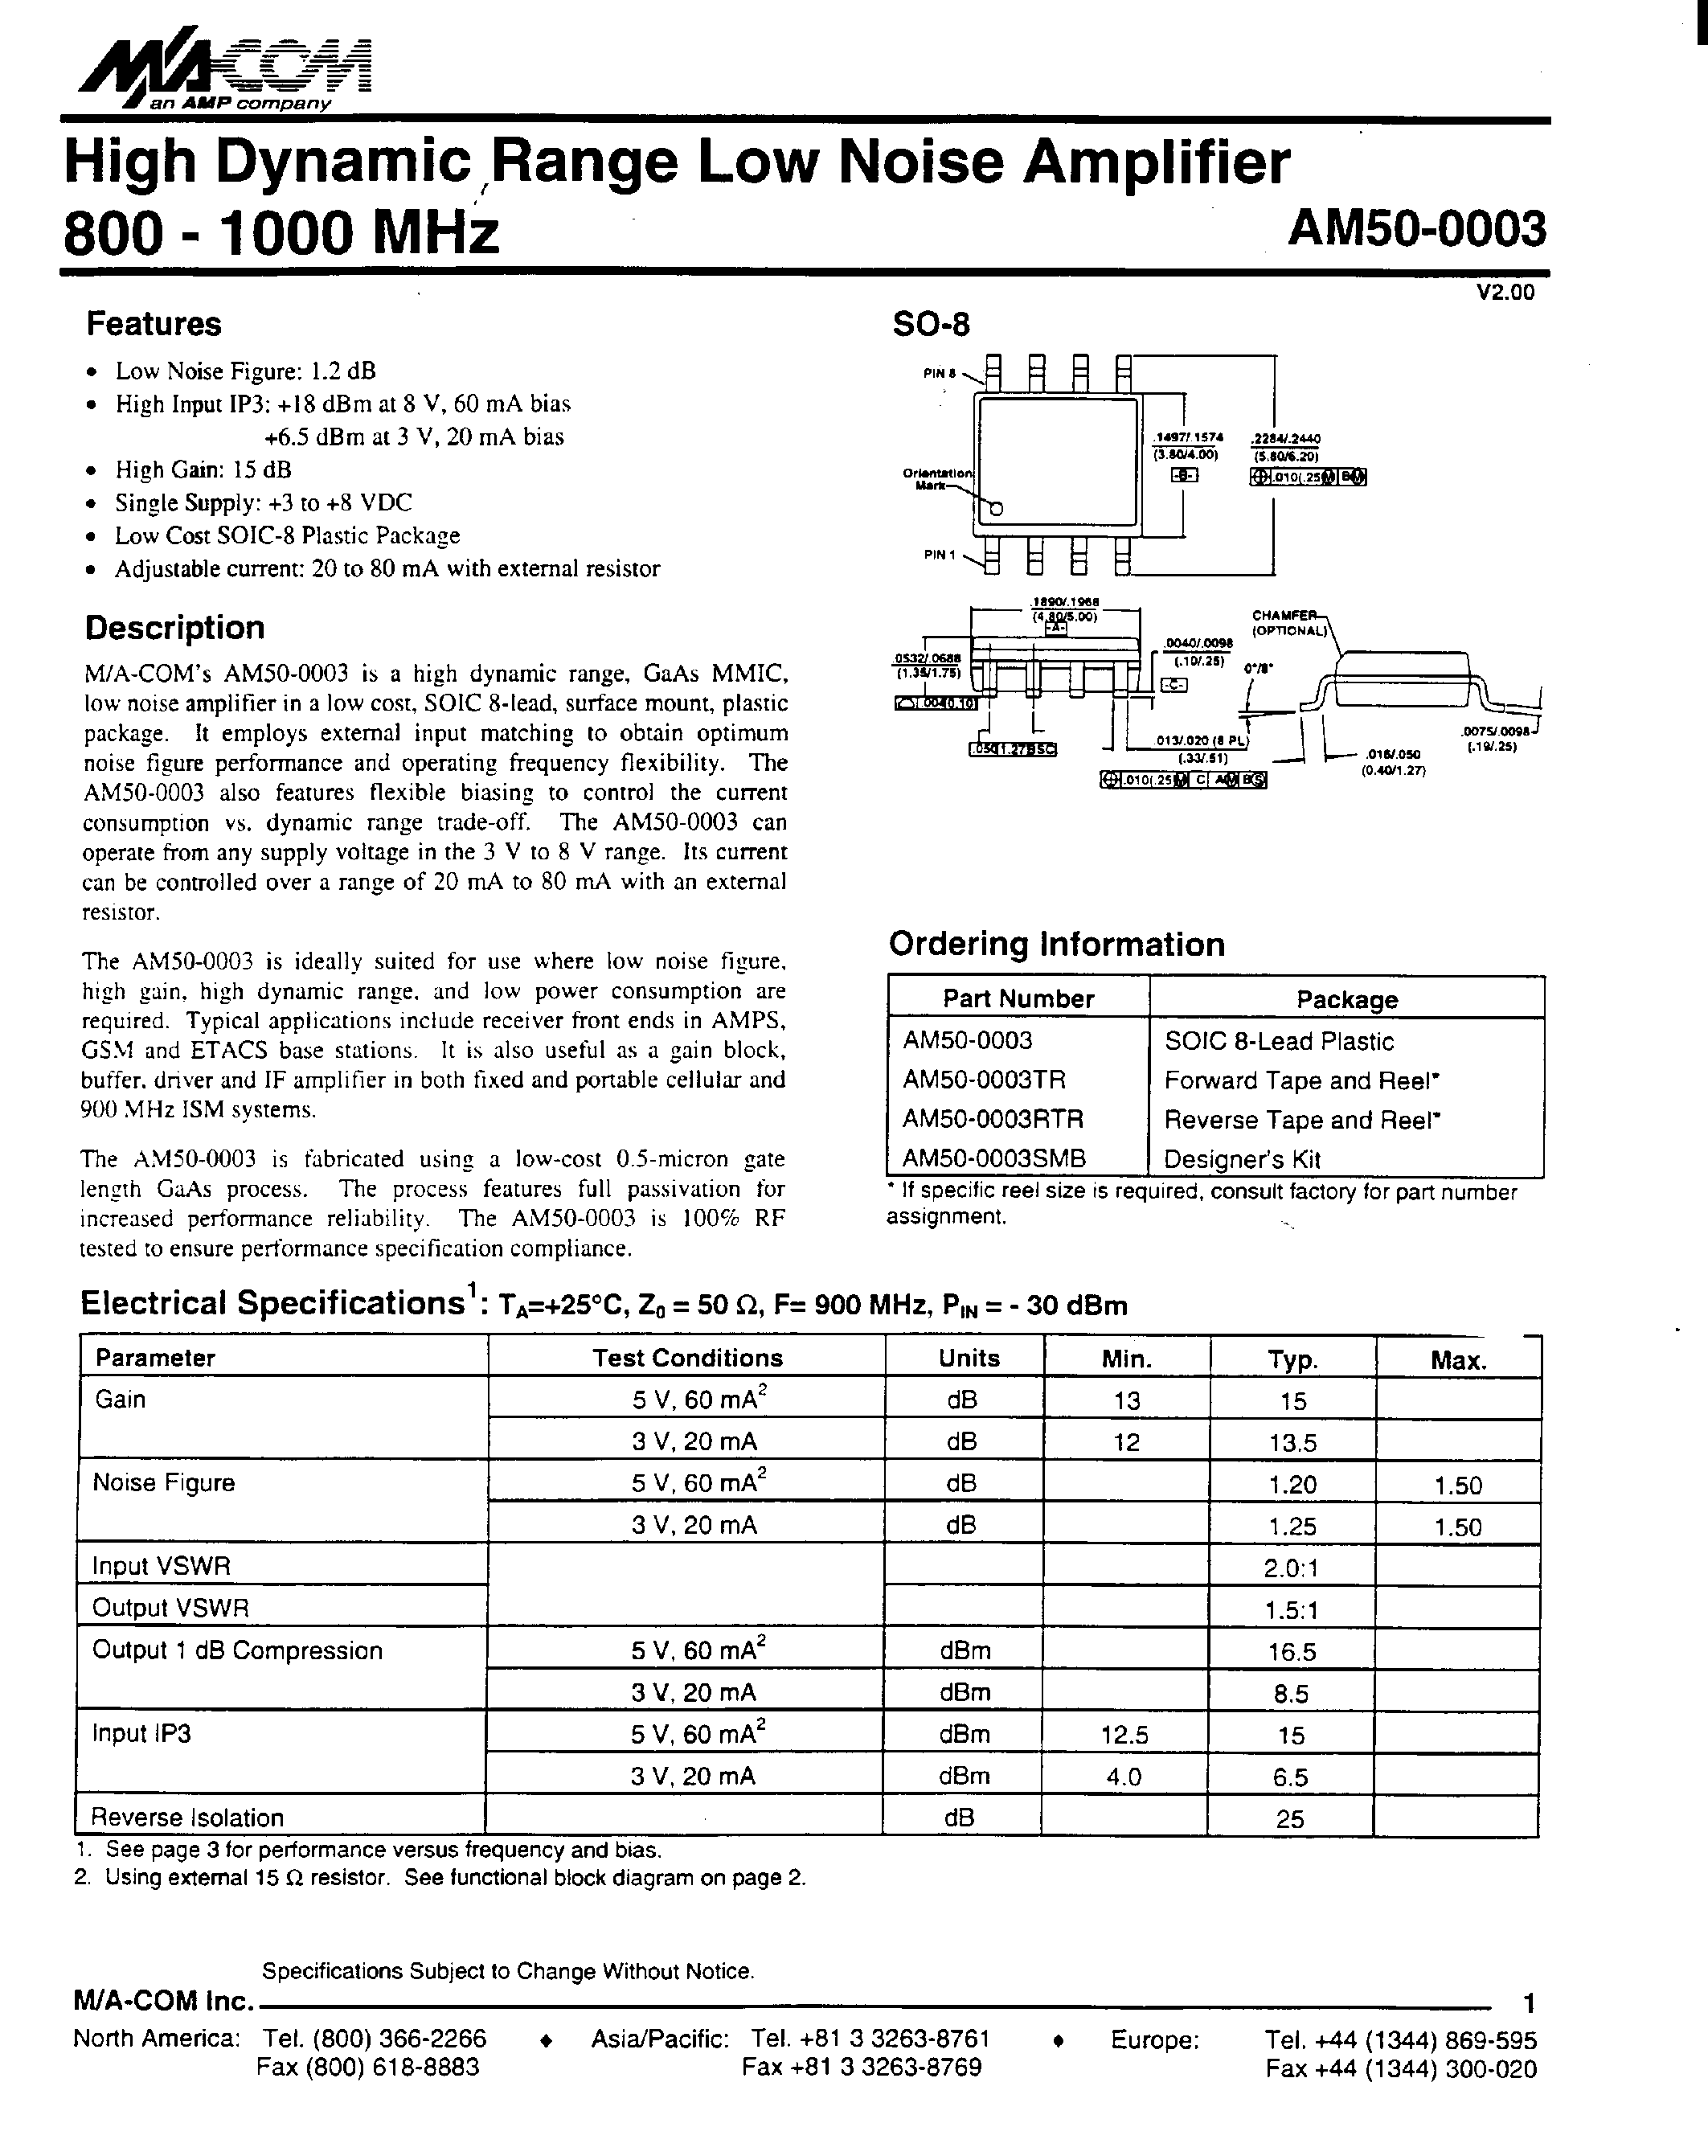 Datasheet AM50-0003SMB - High Dynamic Range Low Noise Amplifier 800-1000 MHz page 1